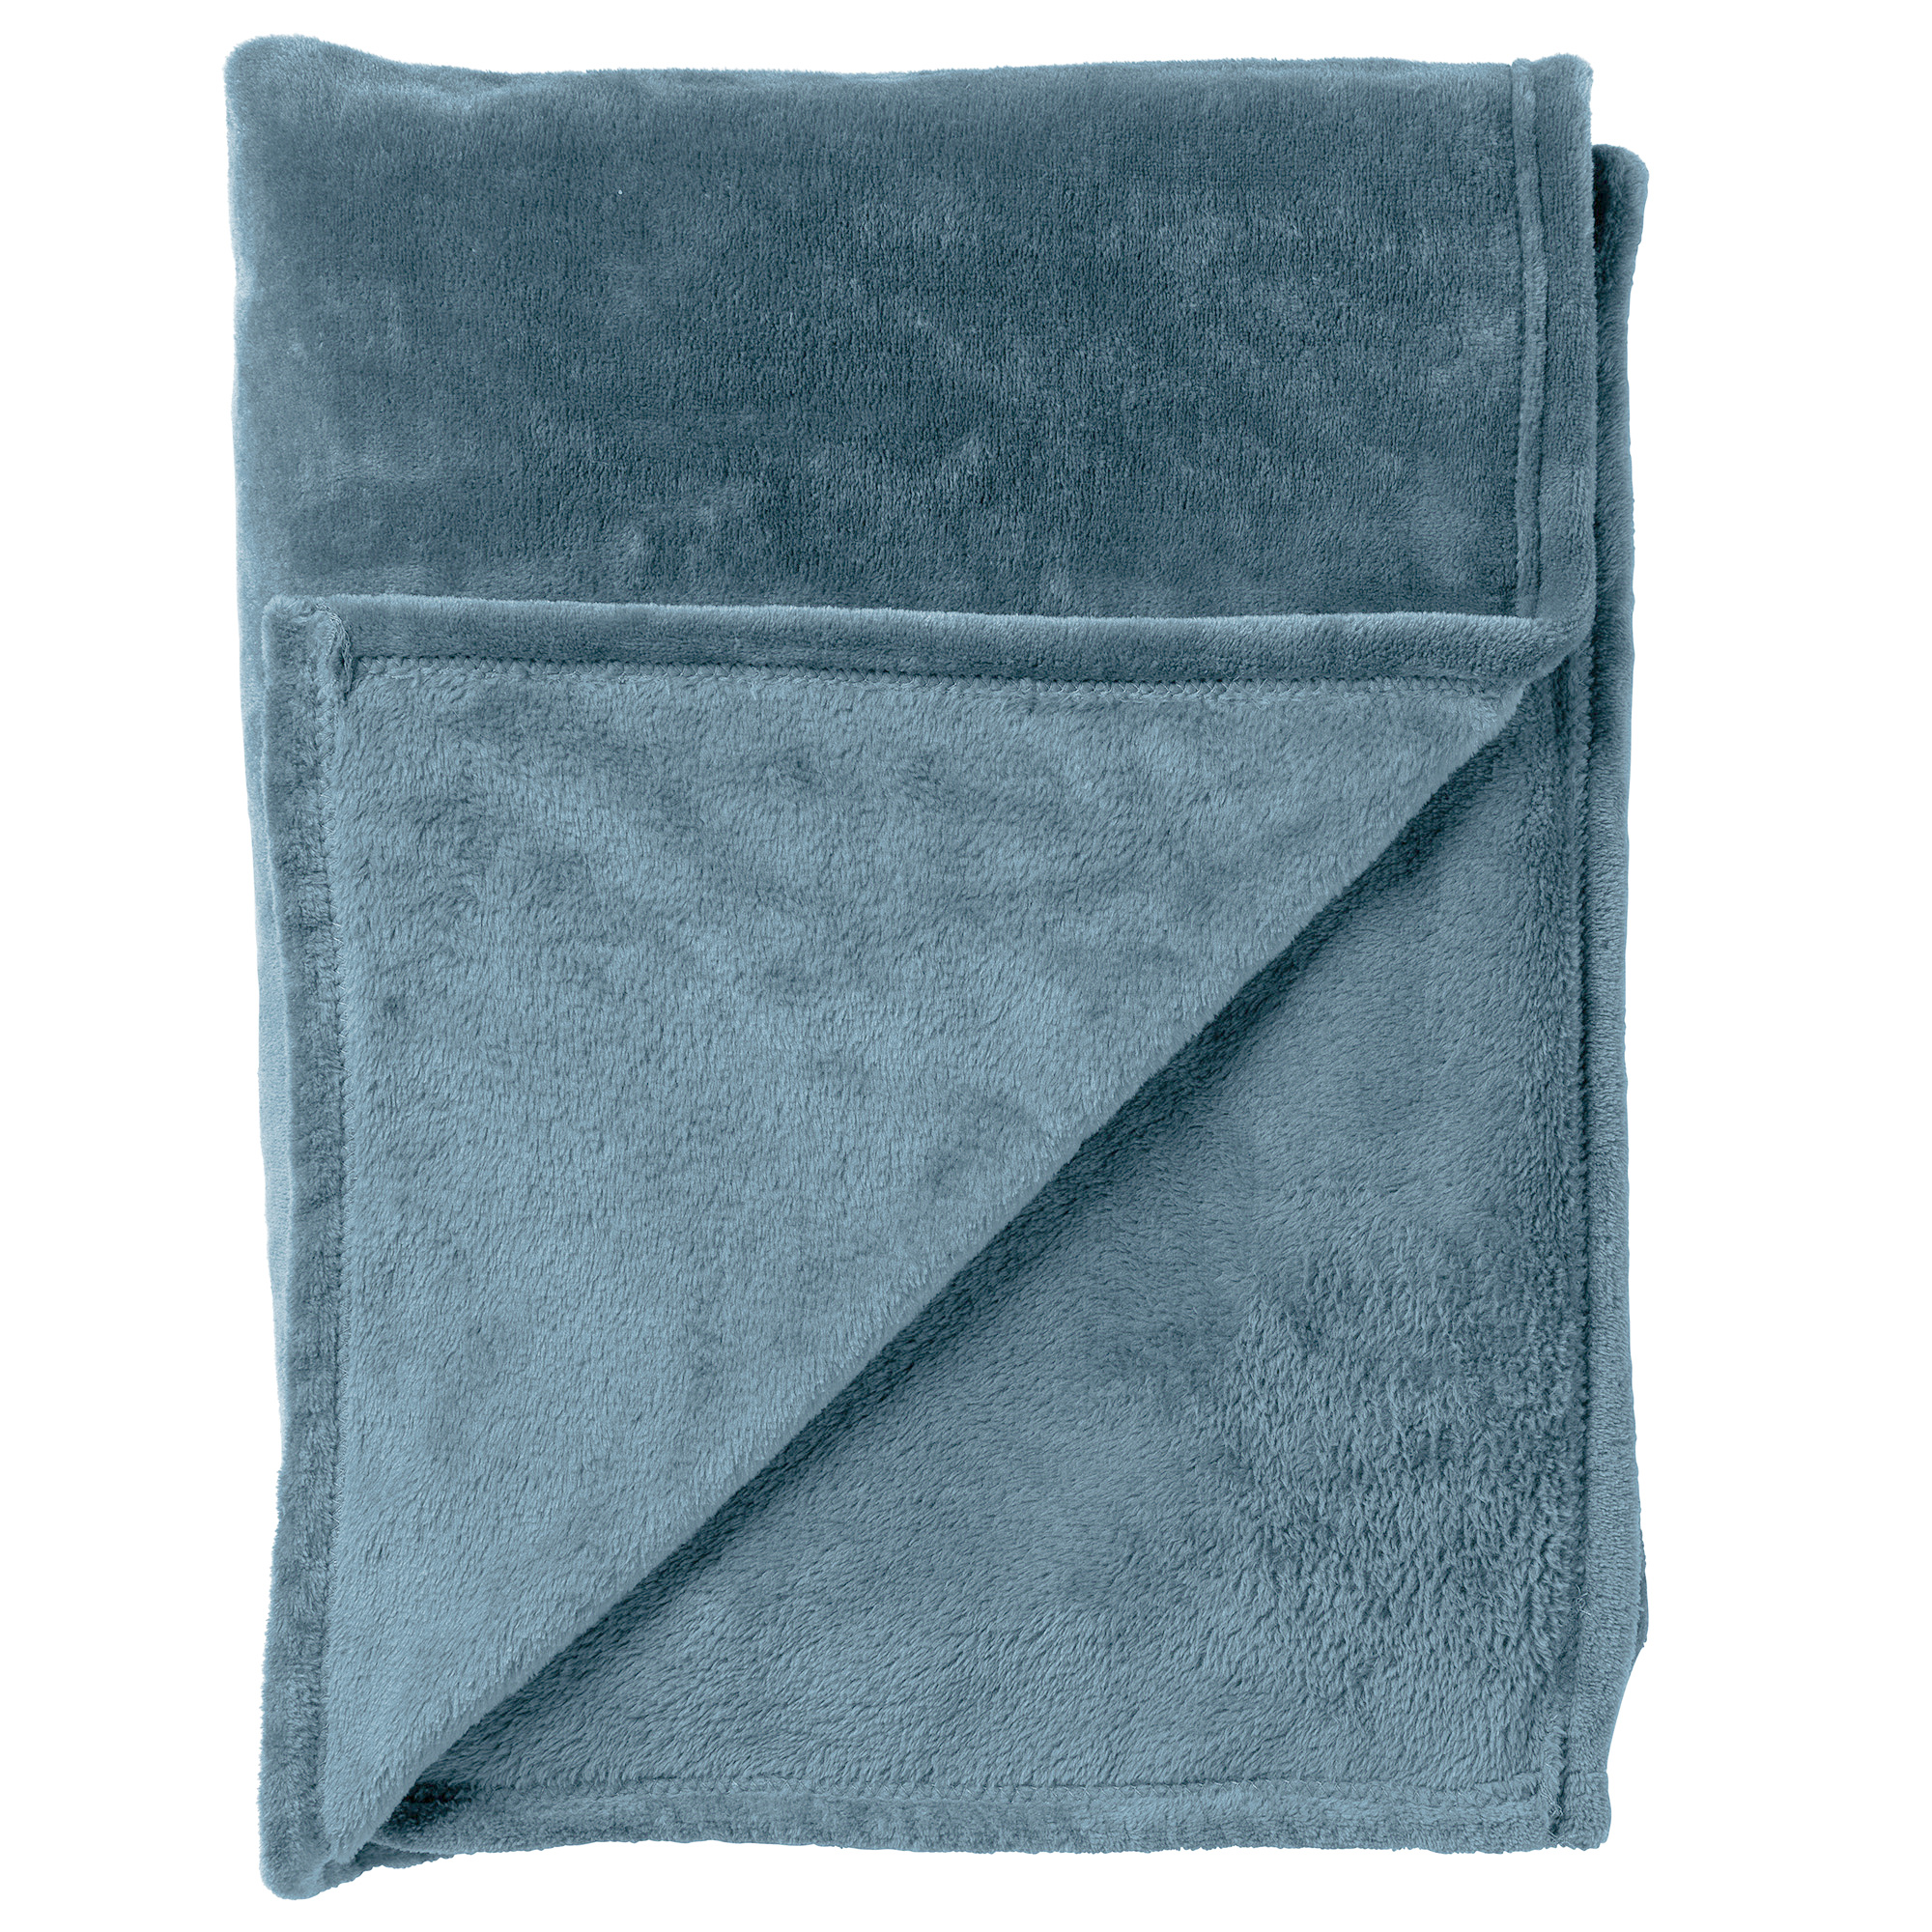 BILLY - Plaid 150x200 cm - flannel fleece - superzacht - Provincial Blue - blauw